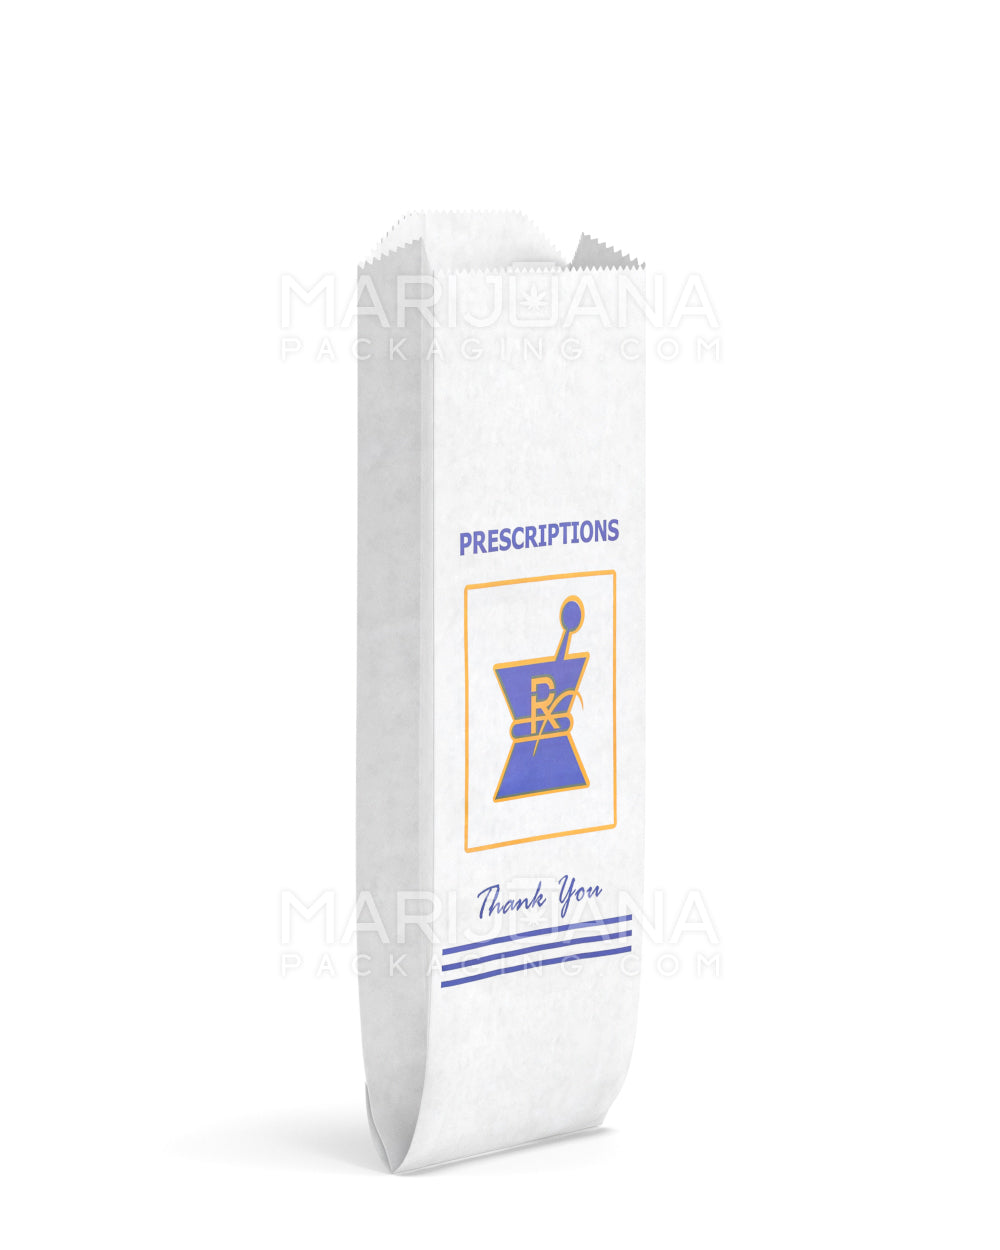 Pharmacy Prescription Bags | Small - Kraft | Sample - 1